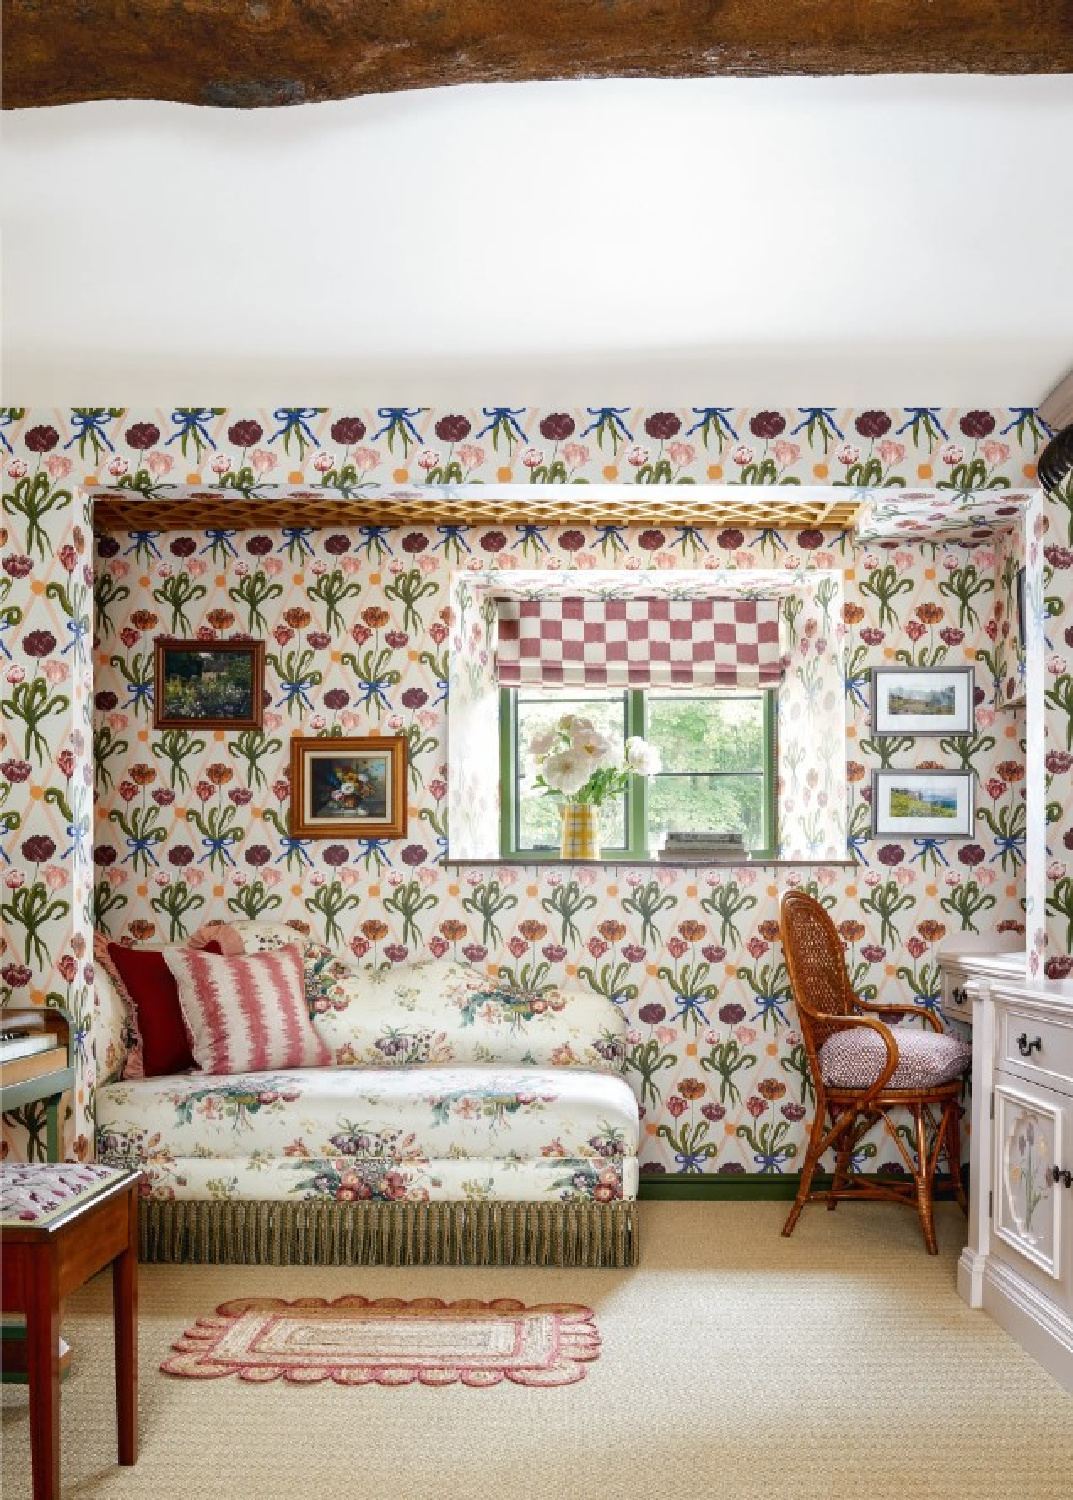 Nadine Finnegan designed Cotswolds snug room with chintz (photo: Paul Massey for House & Garden UK).